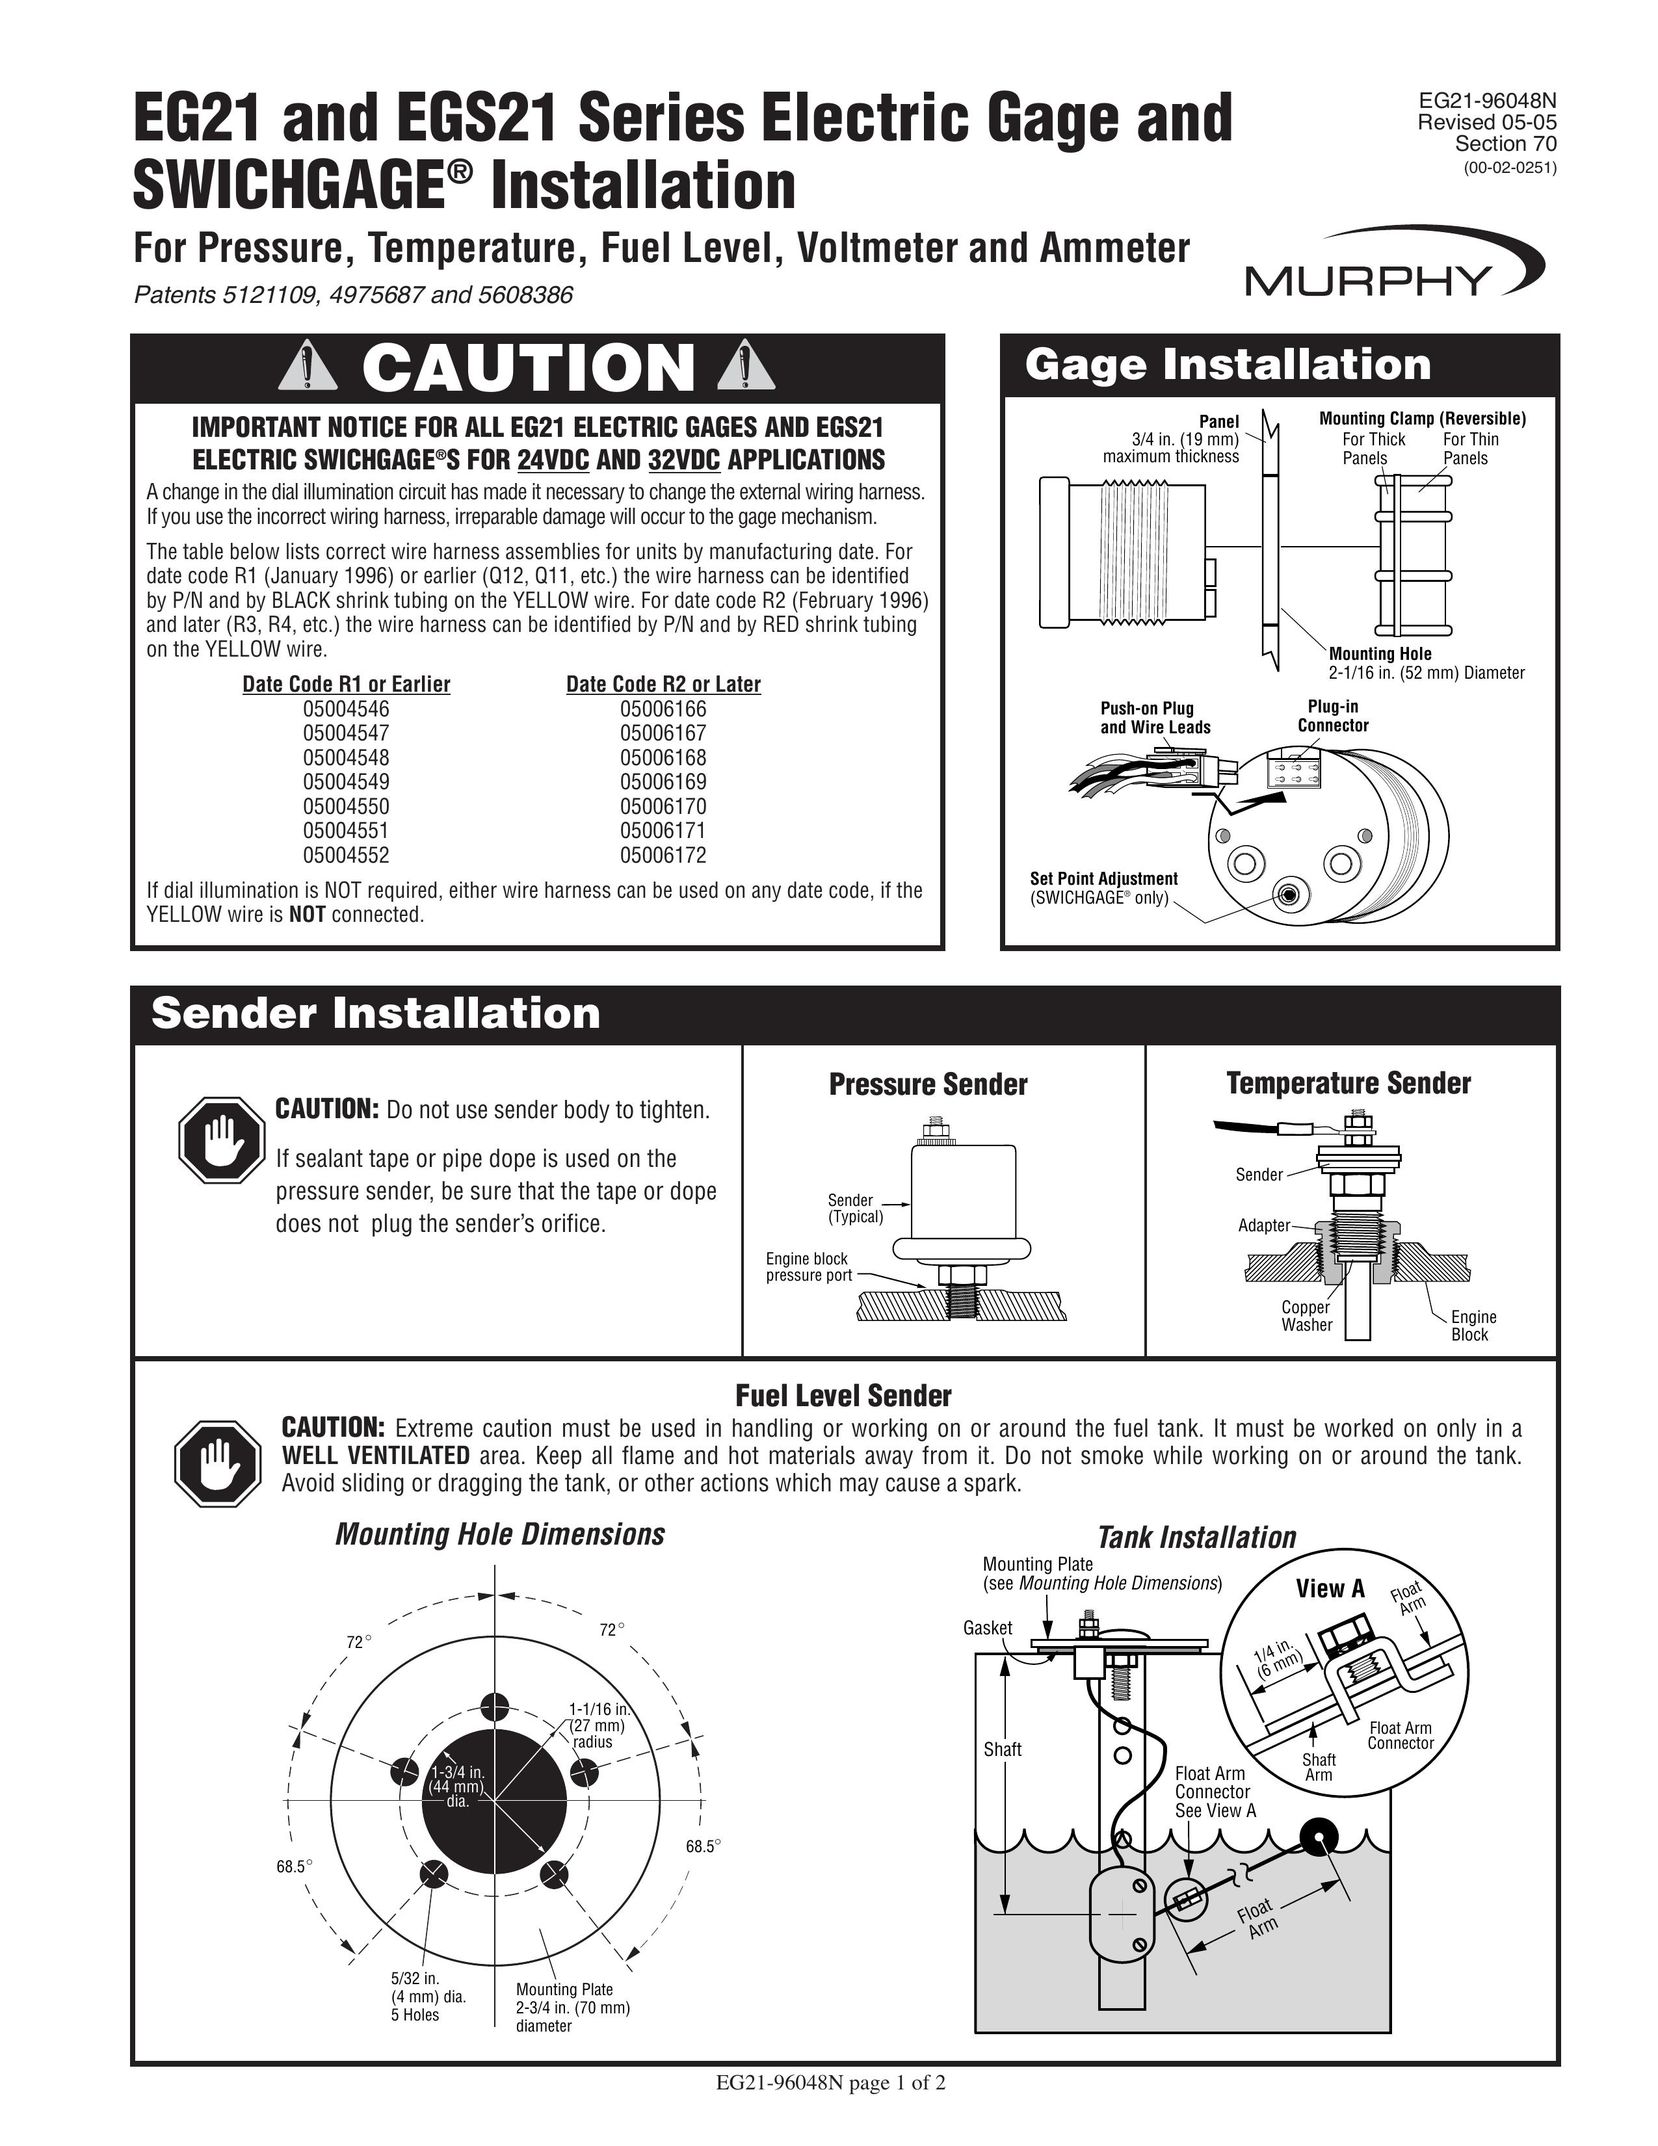 Murphy EG21 Switch User Manual